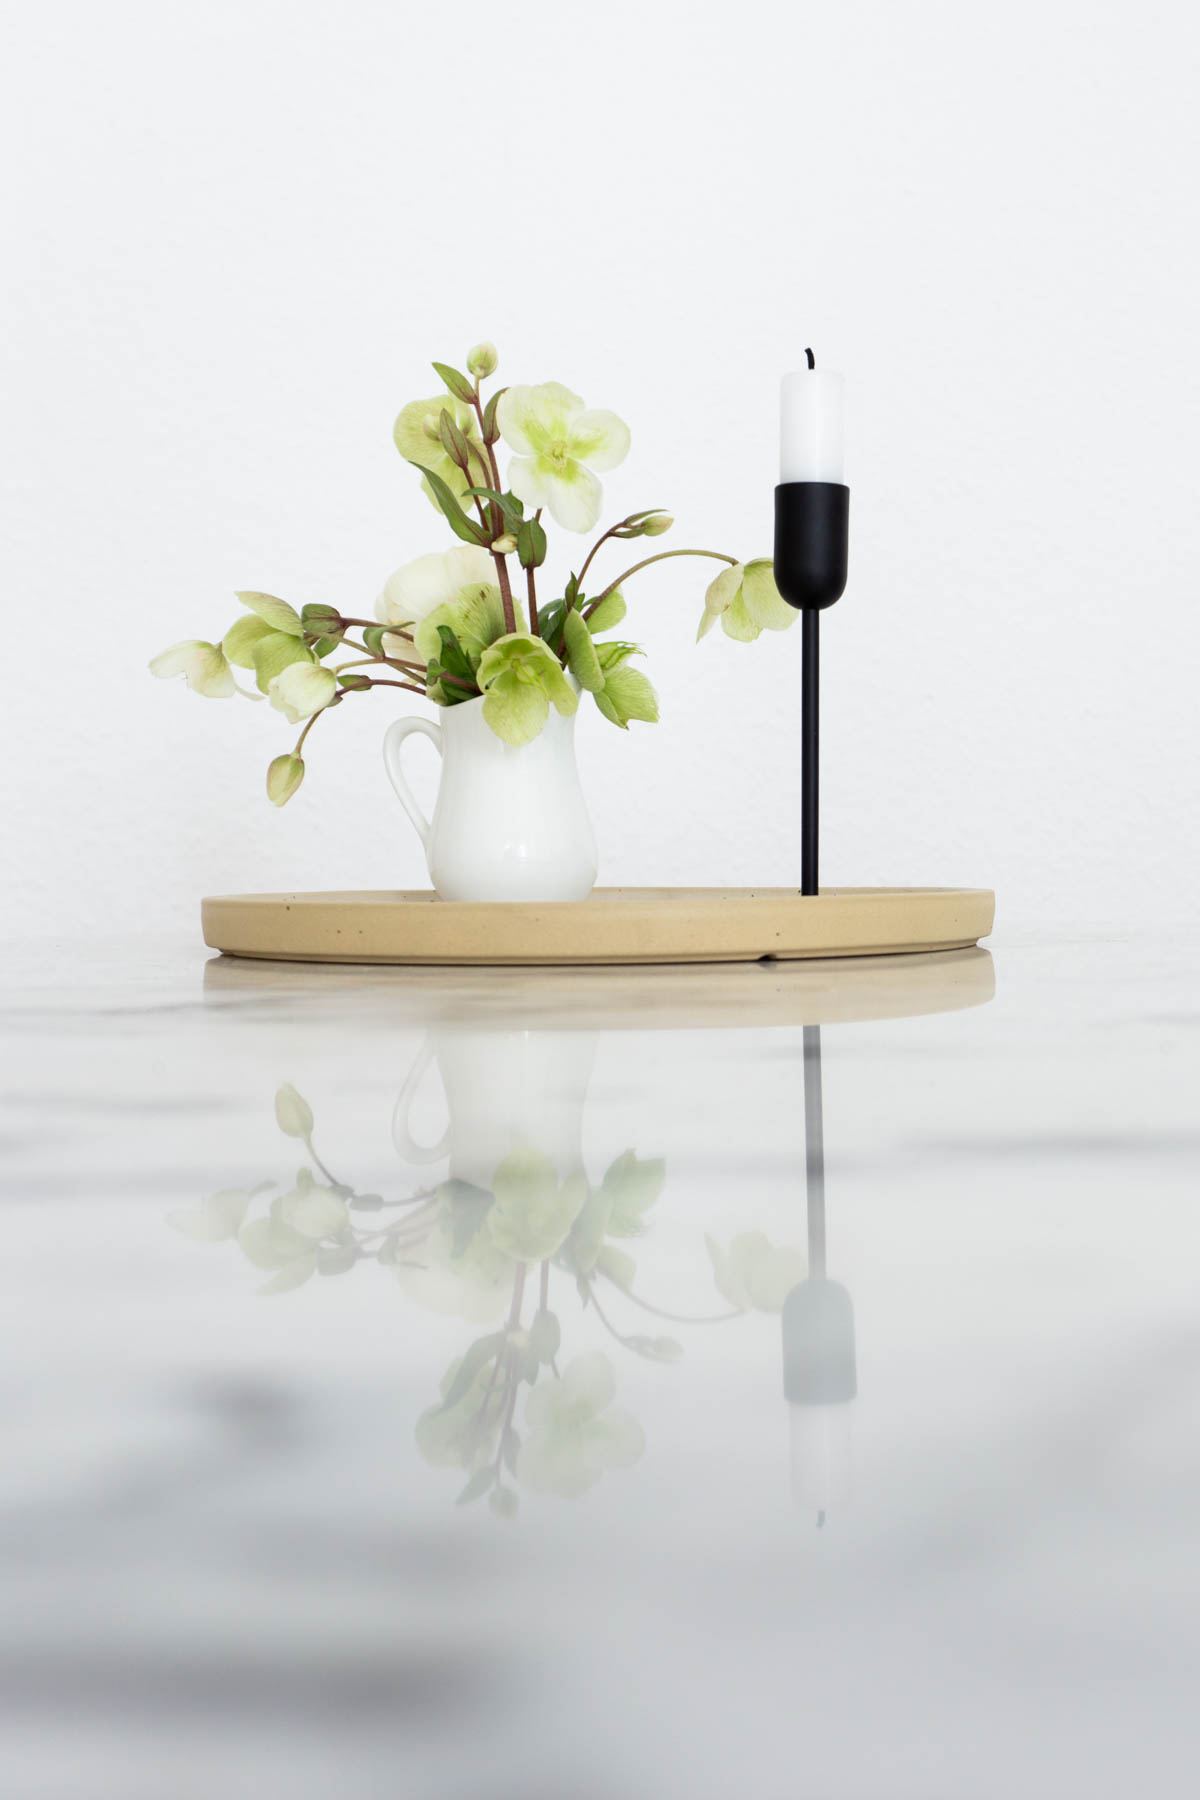 Marble Table and Alva Concept Dish, Minimalist Living Room, Scandinavian Home - Berlin Flat Rebecca Goddard - RG Daily Blog